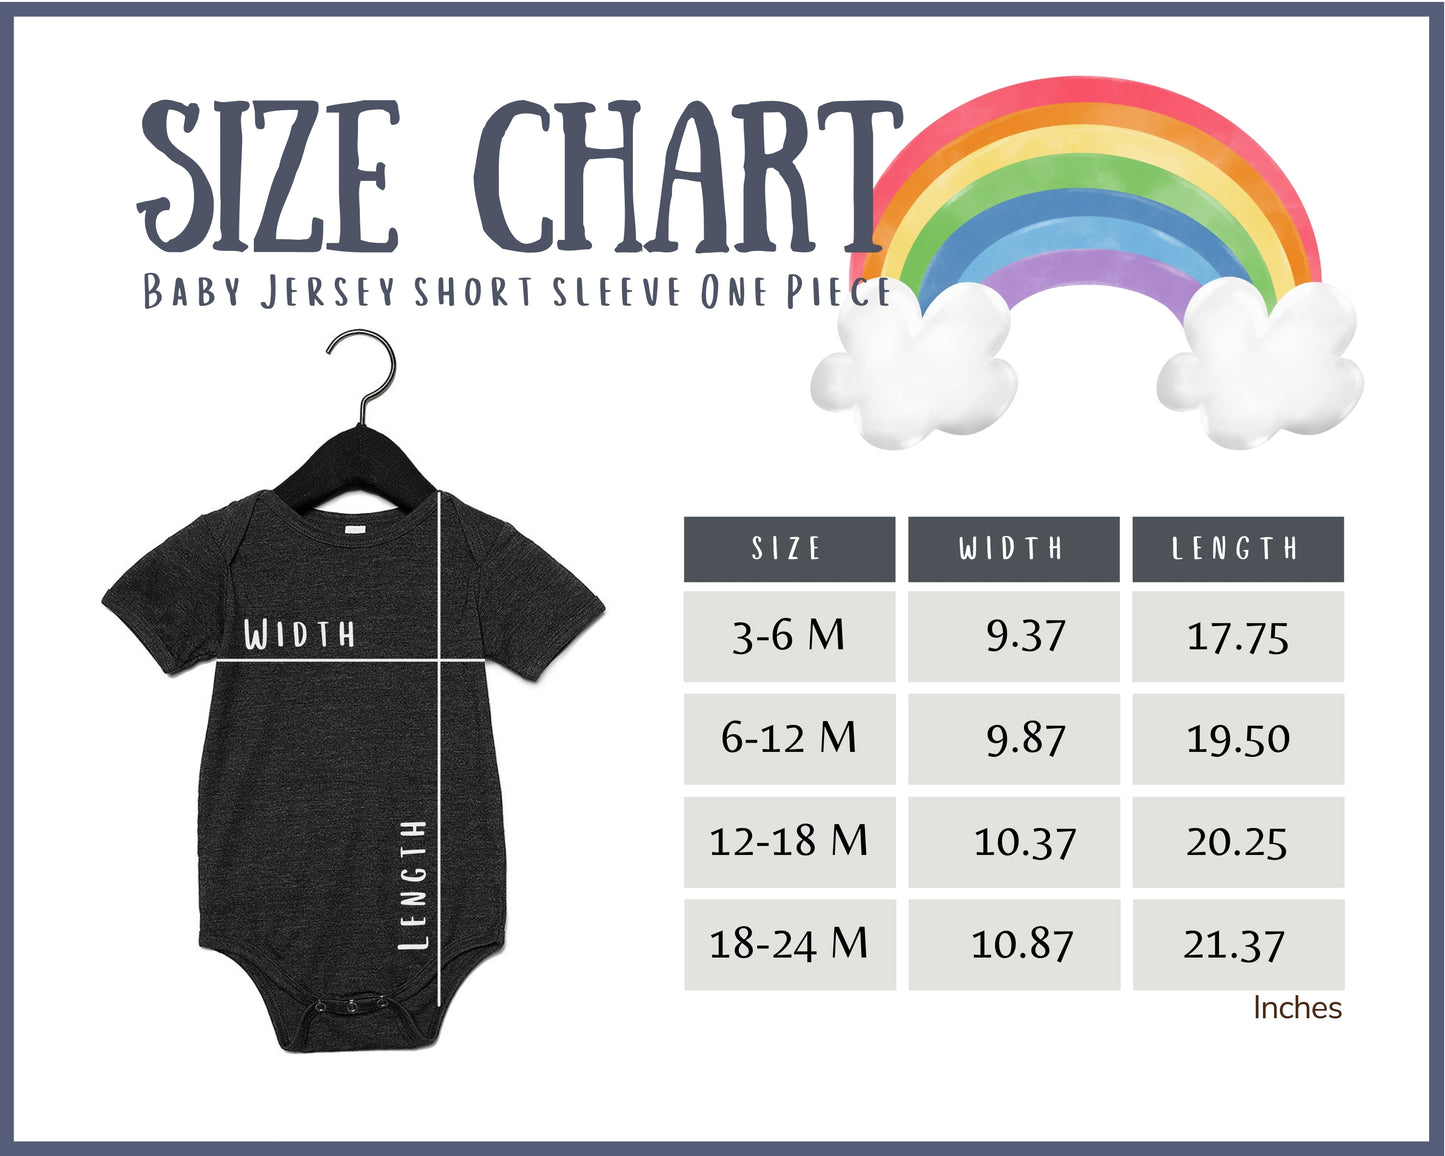 Mañana Sera Bonito- Infant & Toddler- T-Shirt/Onesie/Sweater